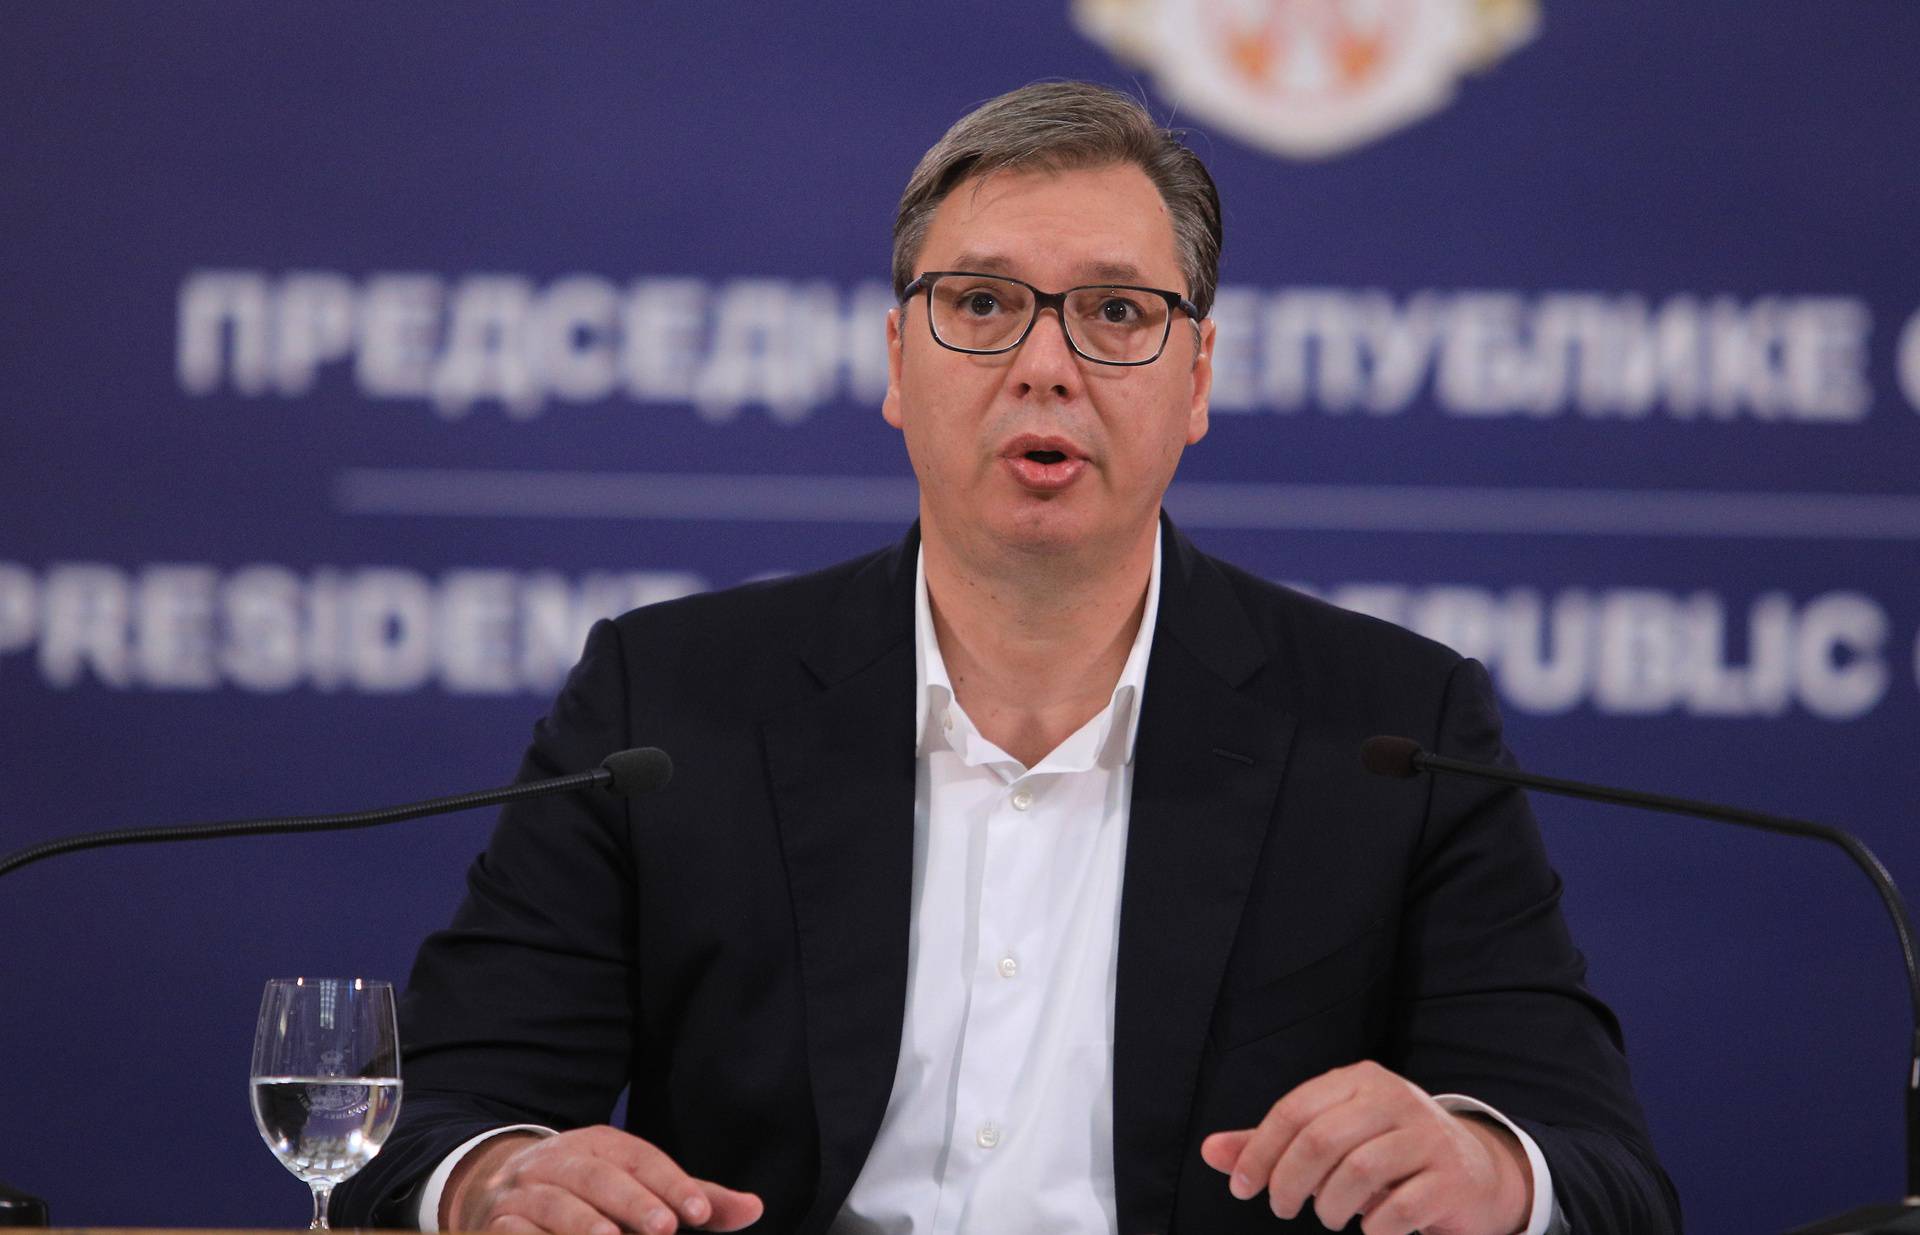 Vučić spreman na bolje odnose s Kosovom, ali ne na ultimatume